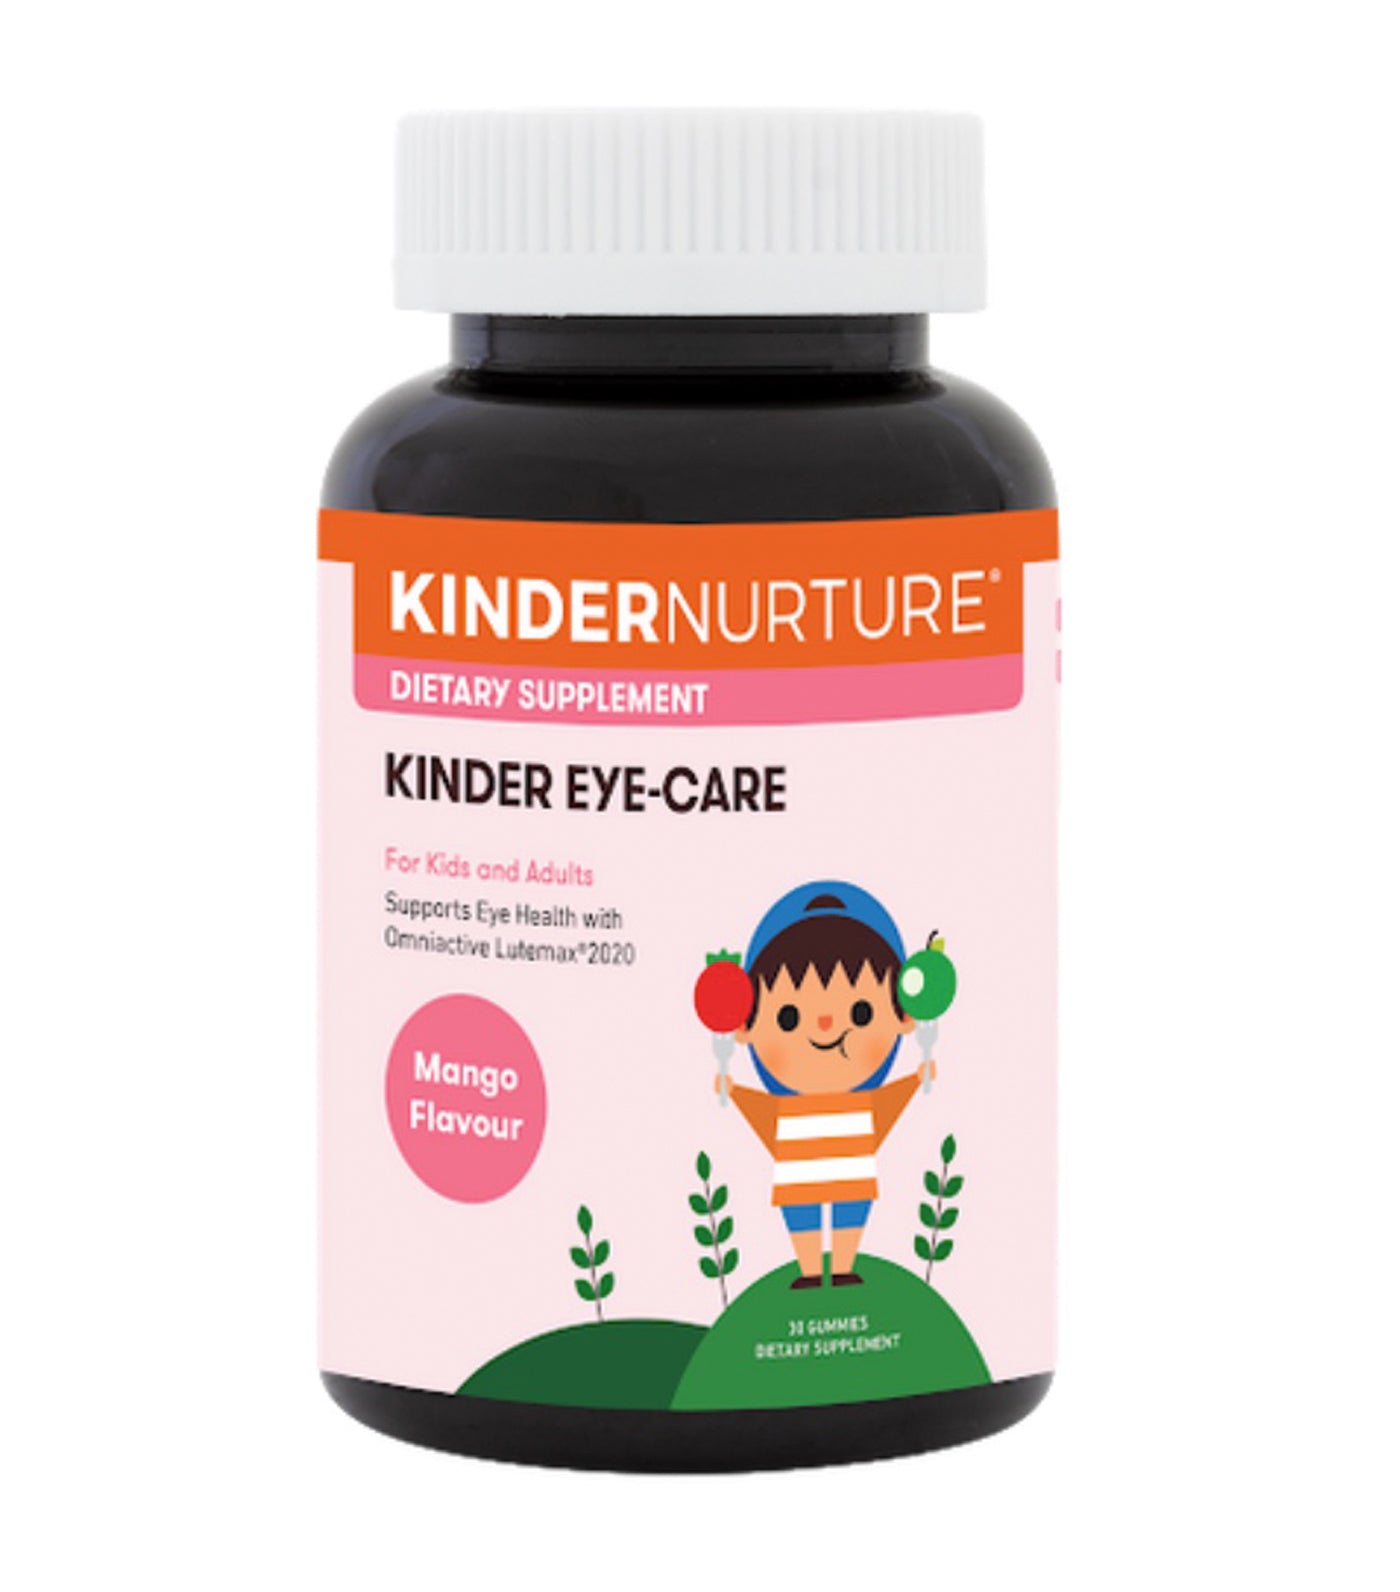 KinderNurture Kinder Eye-Care 30s with Lutemax®